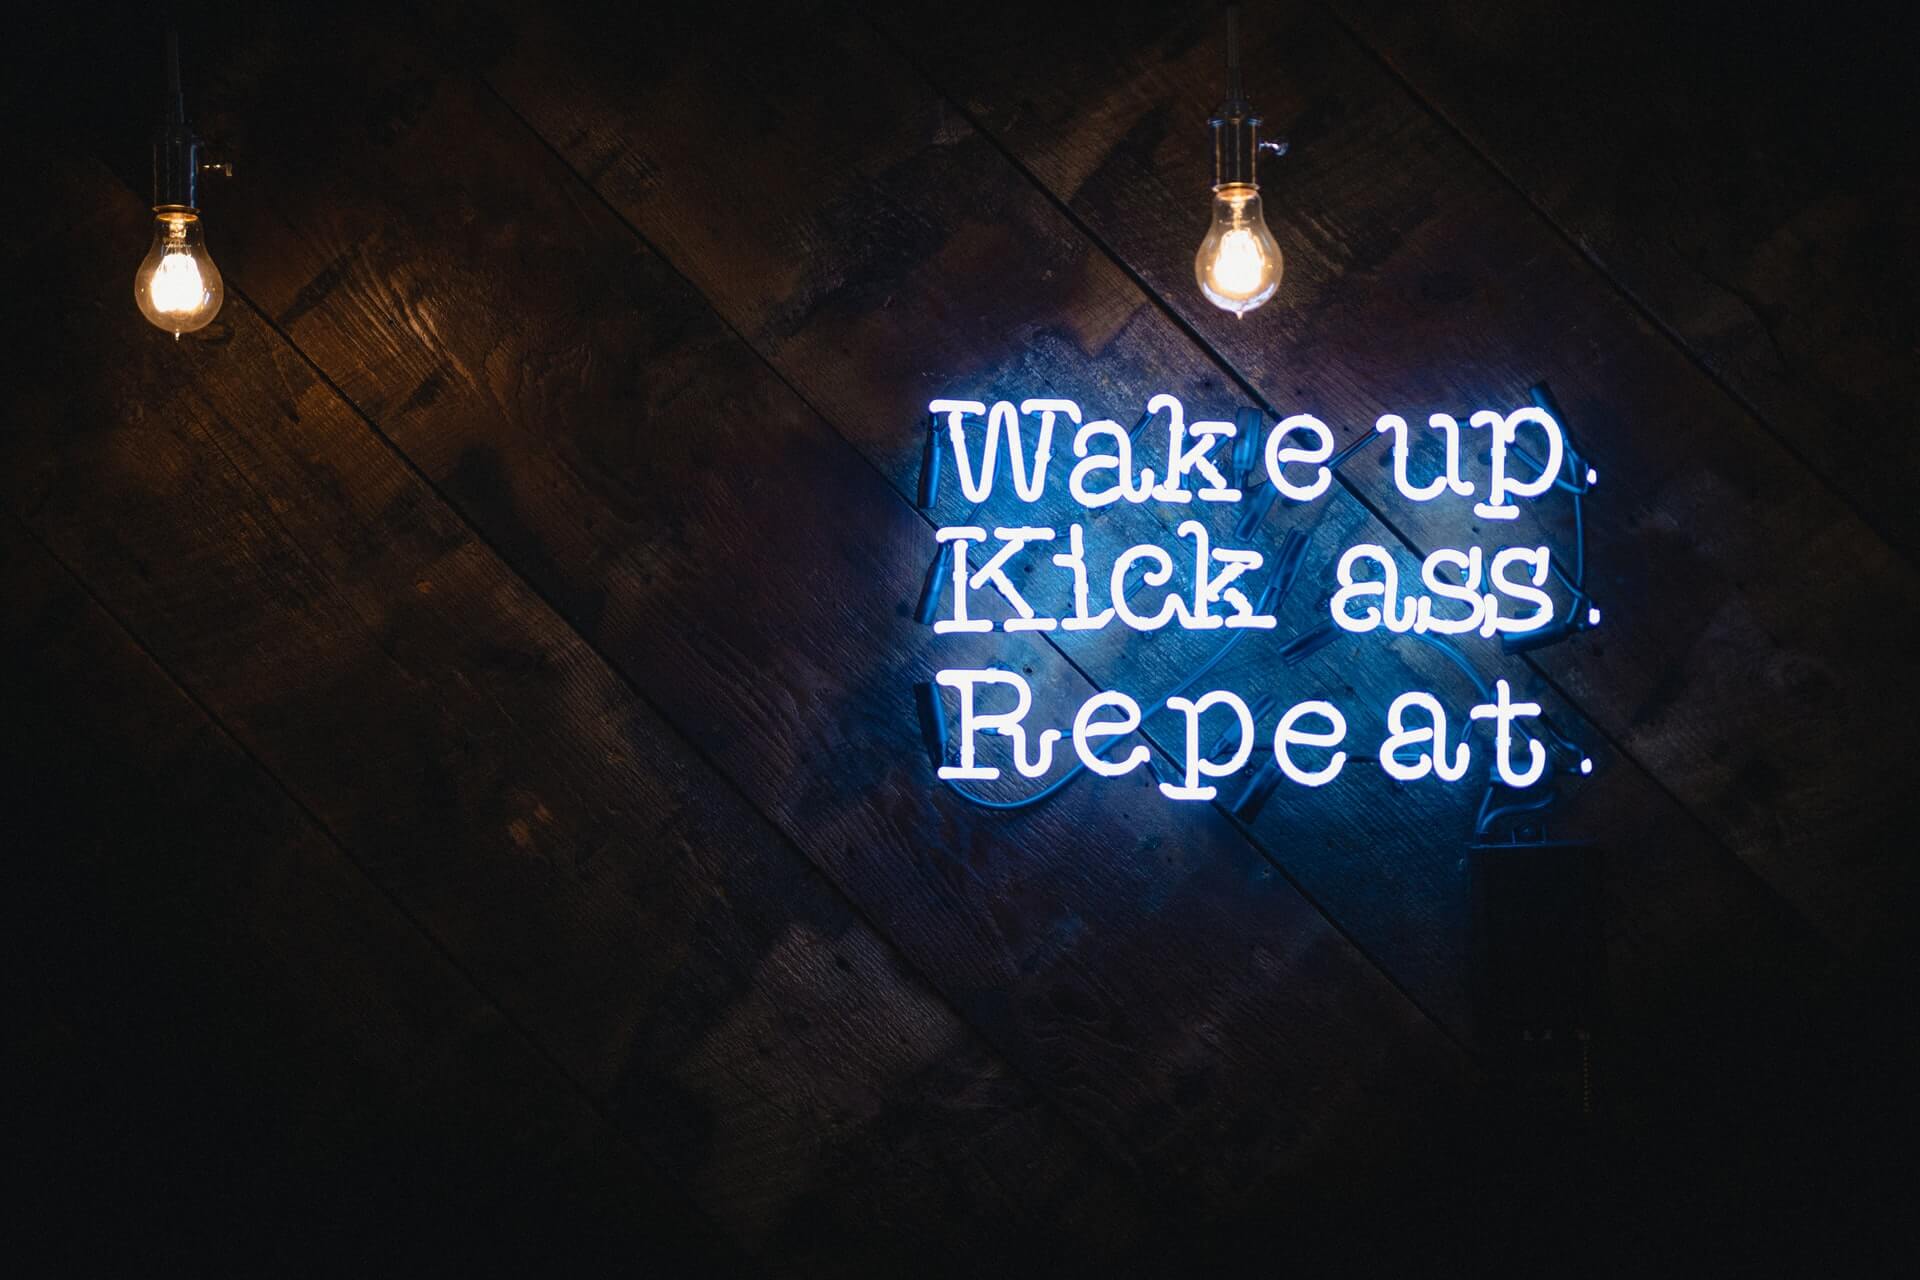 "Wake up, kick ass, repeat" neon sign on wall